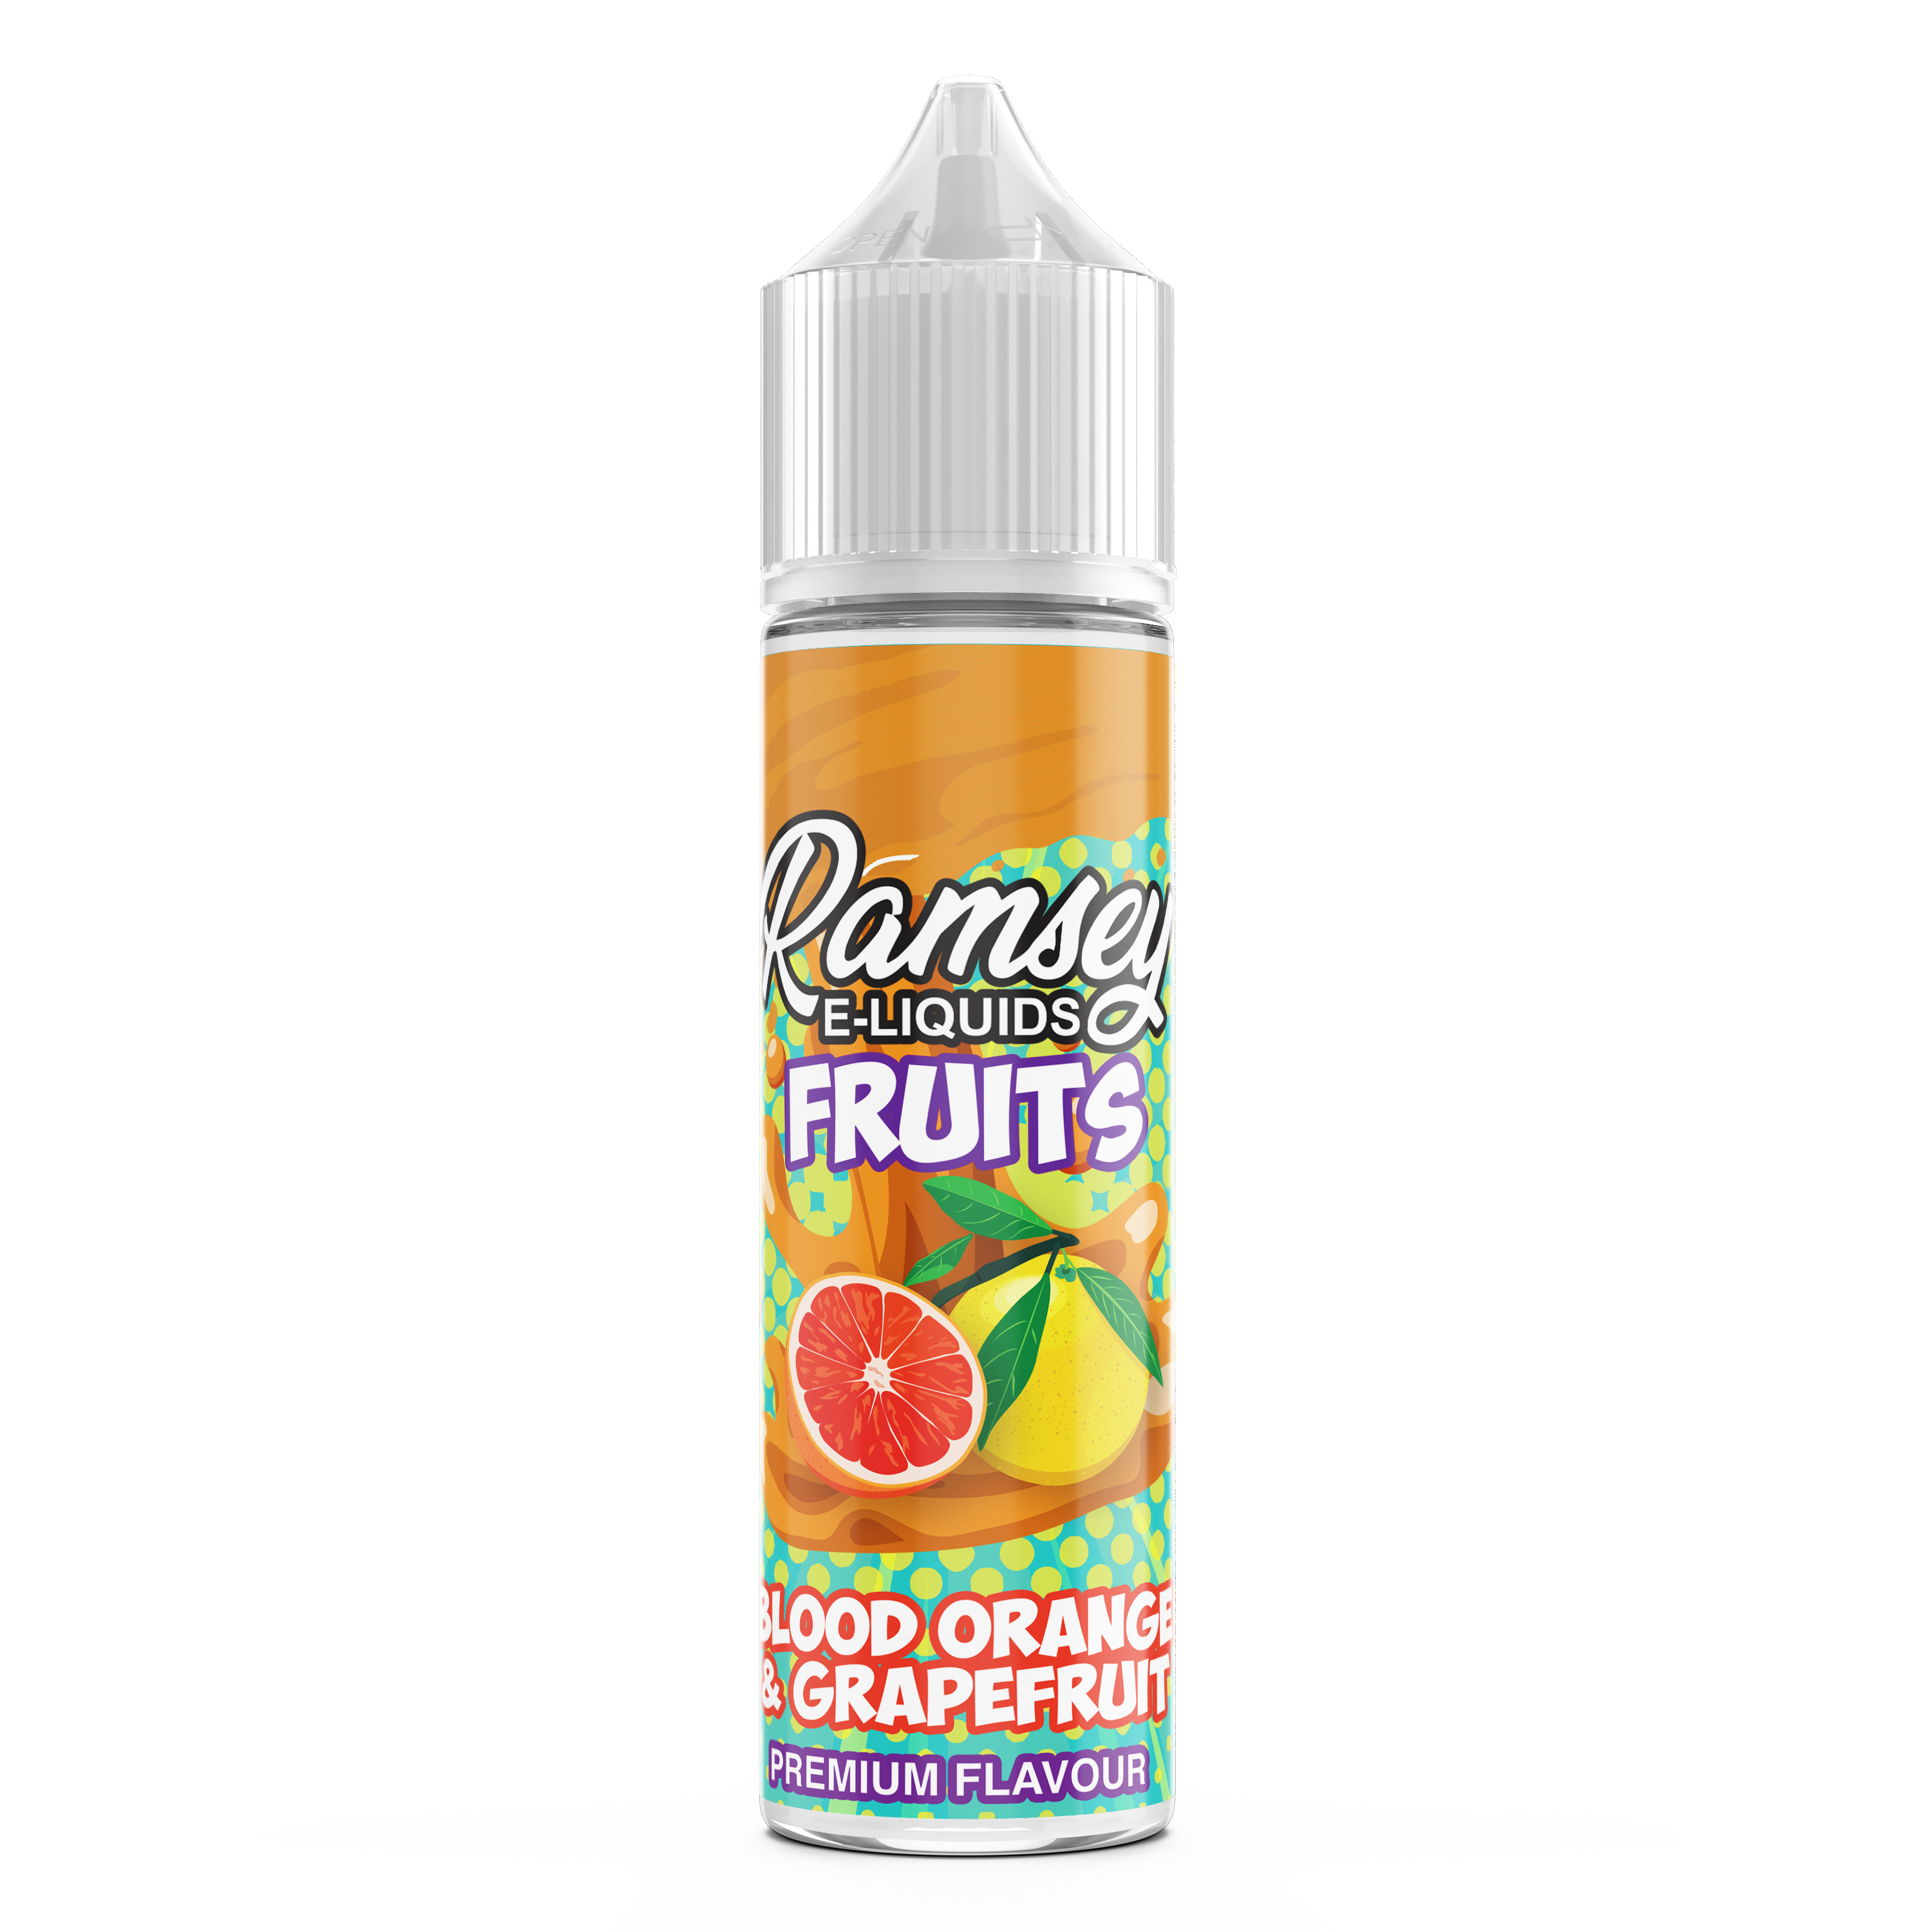 Ramsey E-Liquids Fruits: Blood Orange Grapefruit 0mg 50ml Shortfill E-Liquid